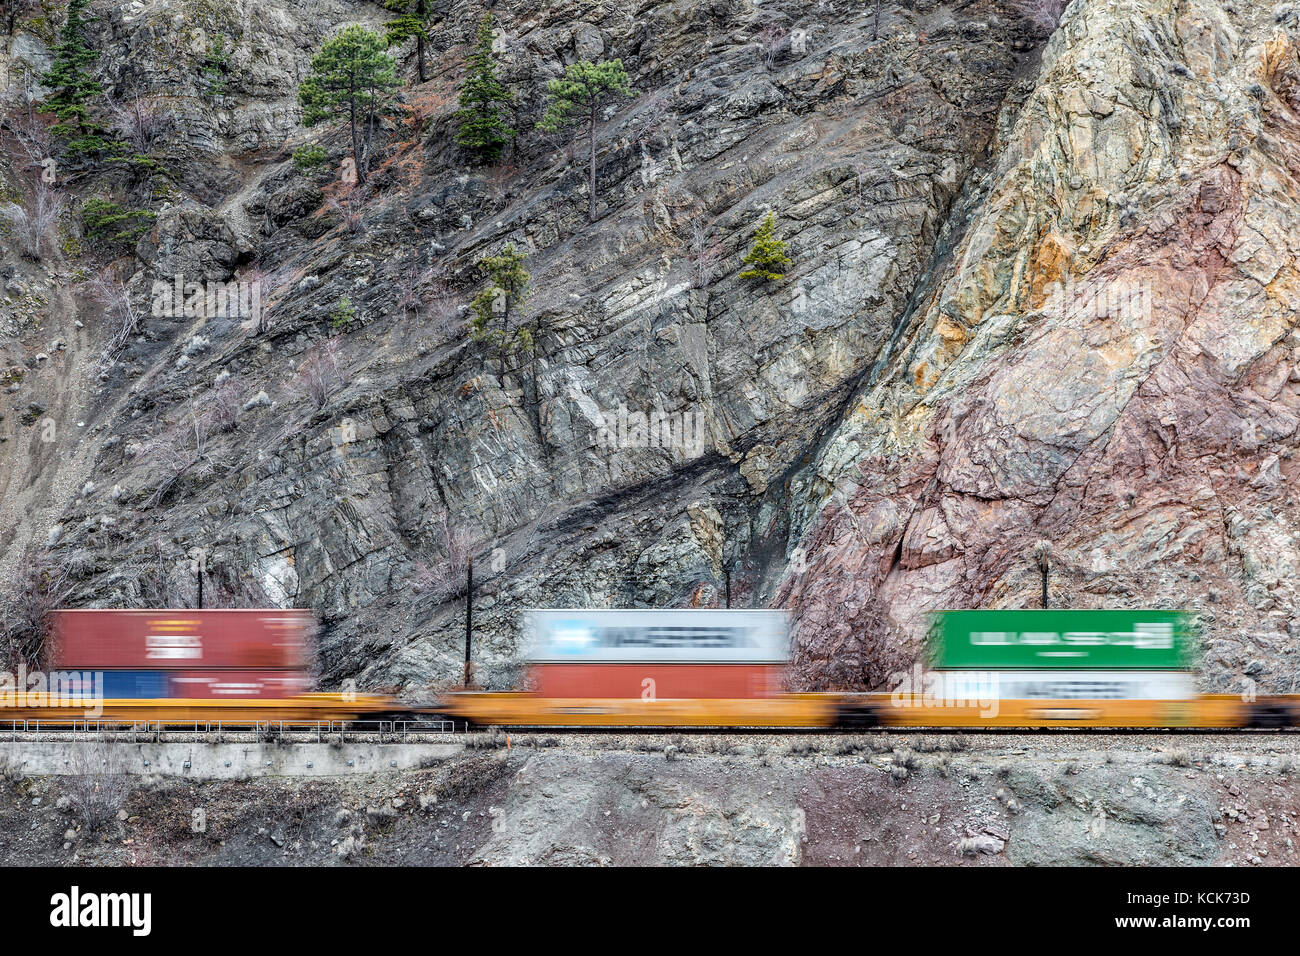 Canada, British Columbia, Fraser River Canyon, Via Rail line, Canadian Pacific Railway line, railway, freight train, motion, Stock Photo